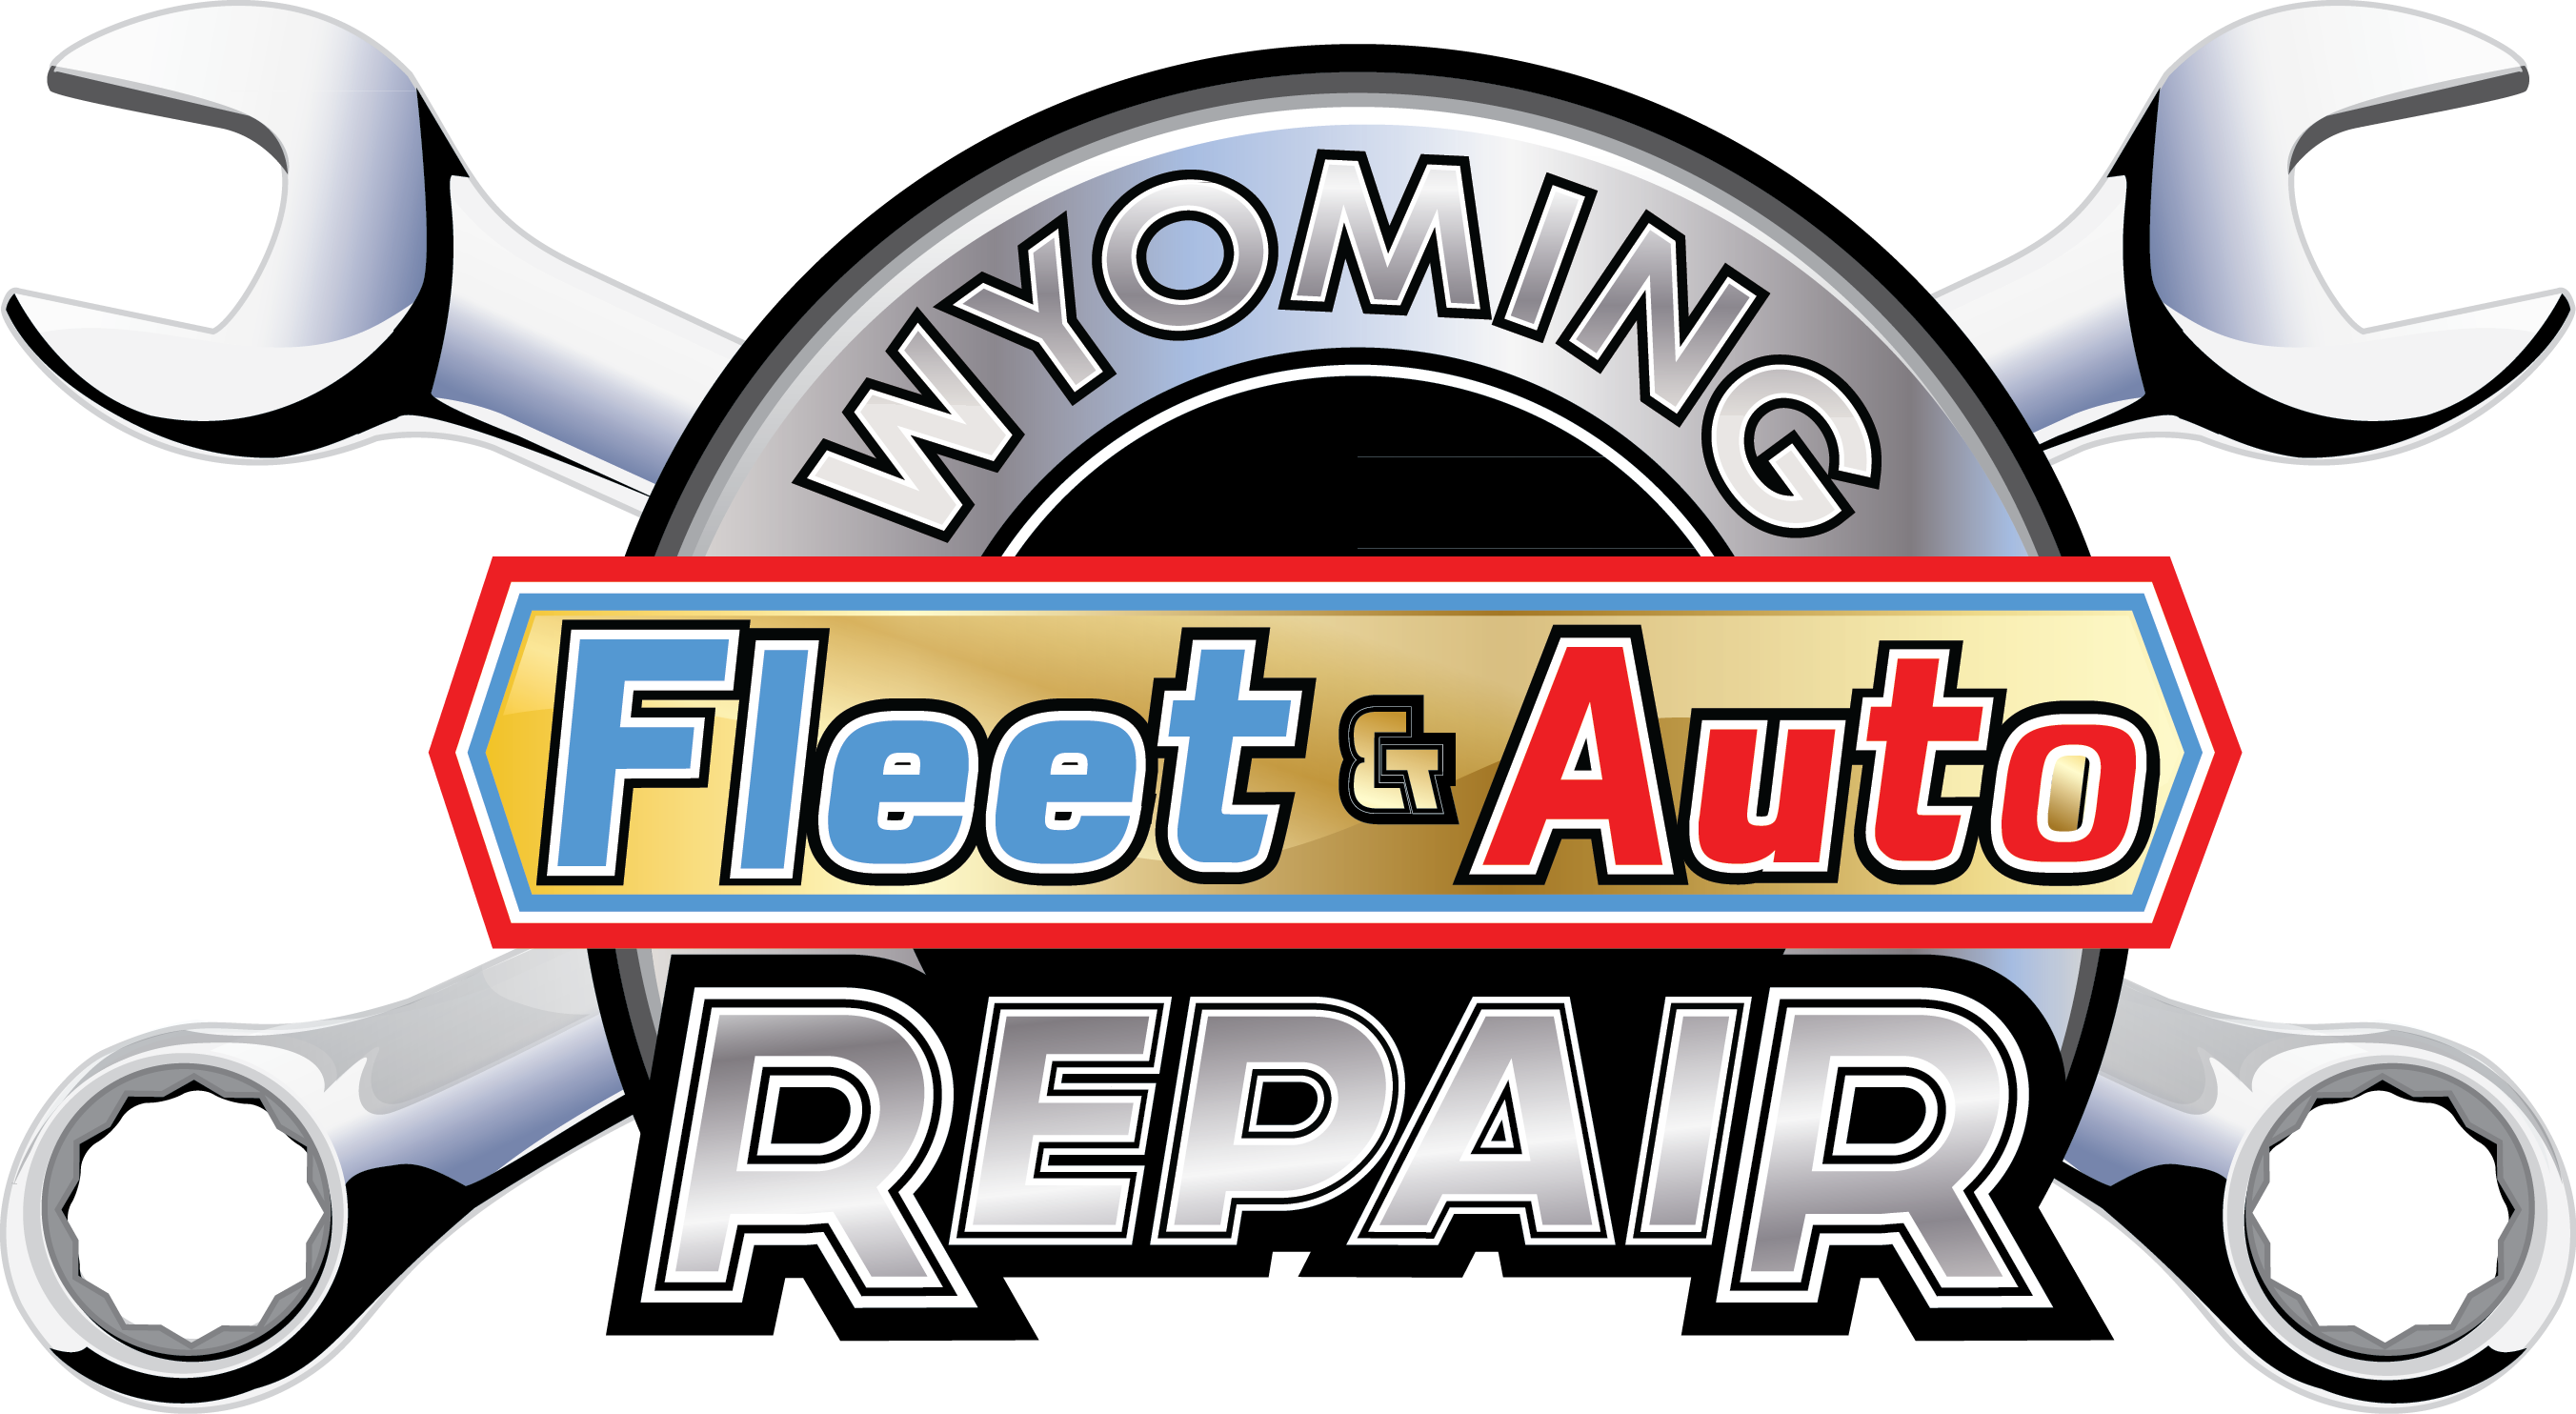 Mechanic clipart car servicing. Wyoming fleet auto repair